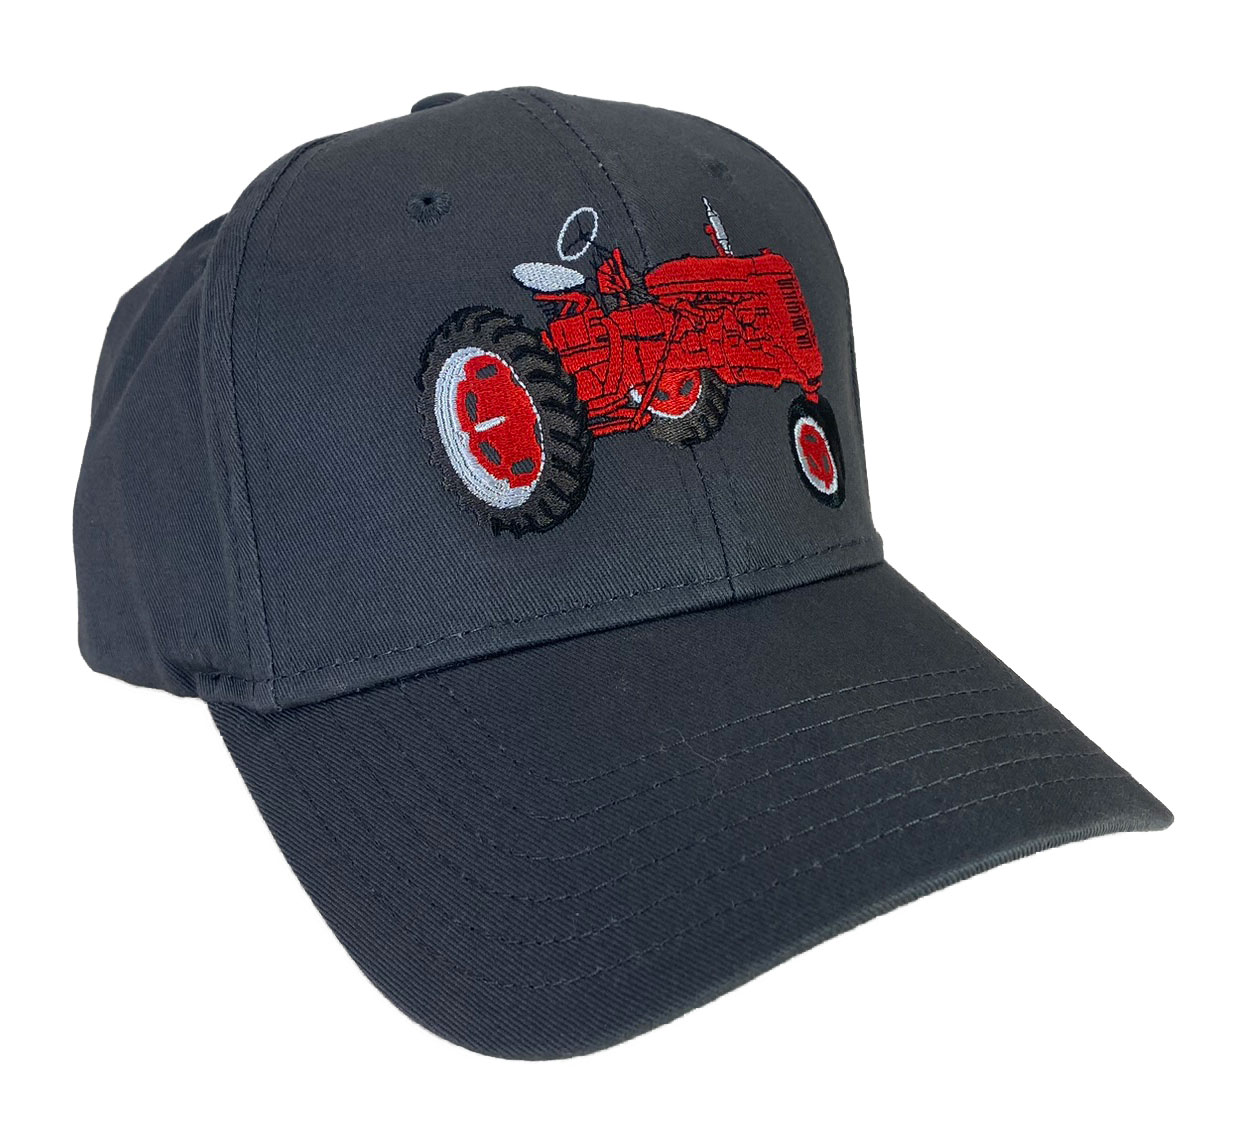 International McCormick Hat Farmall Embroidered Red - Cap Tractor #44-8000CGV Logos Locomotive